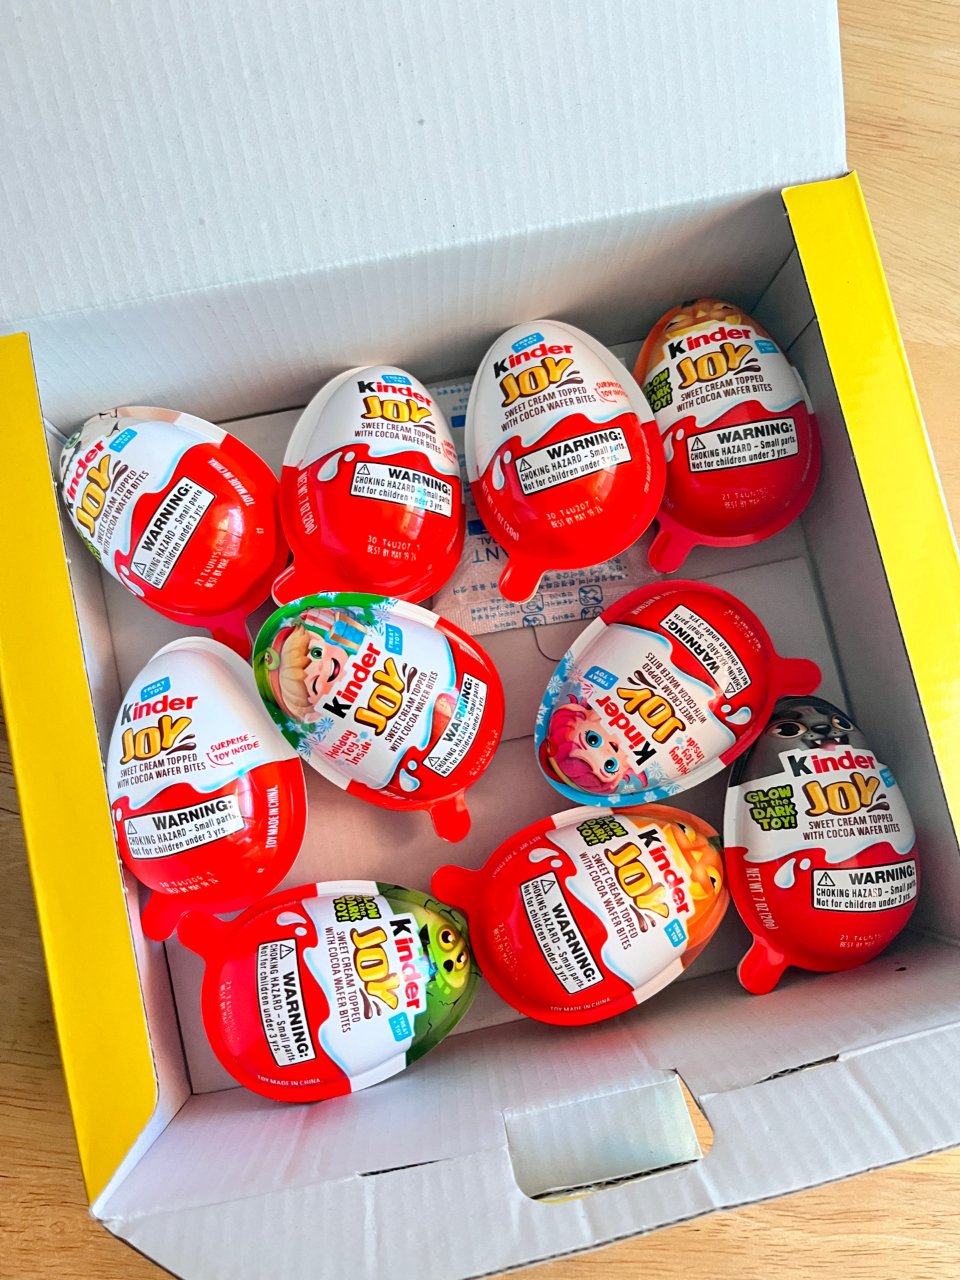 Kinder joy eggs